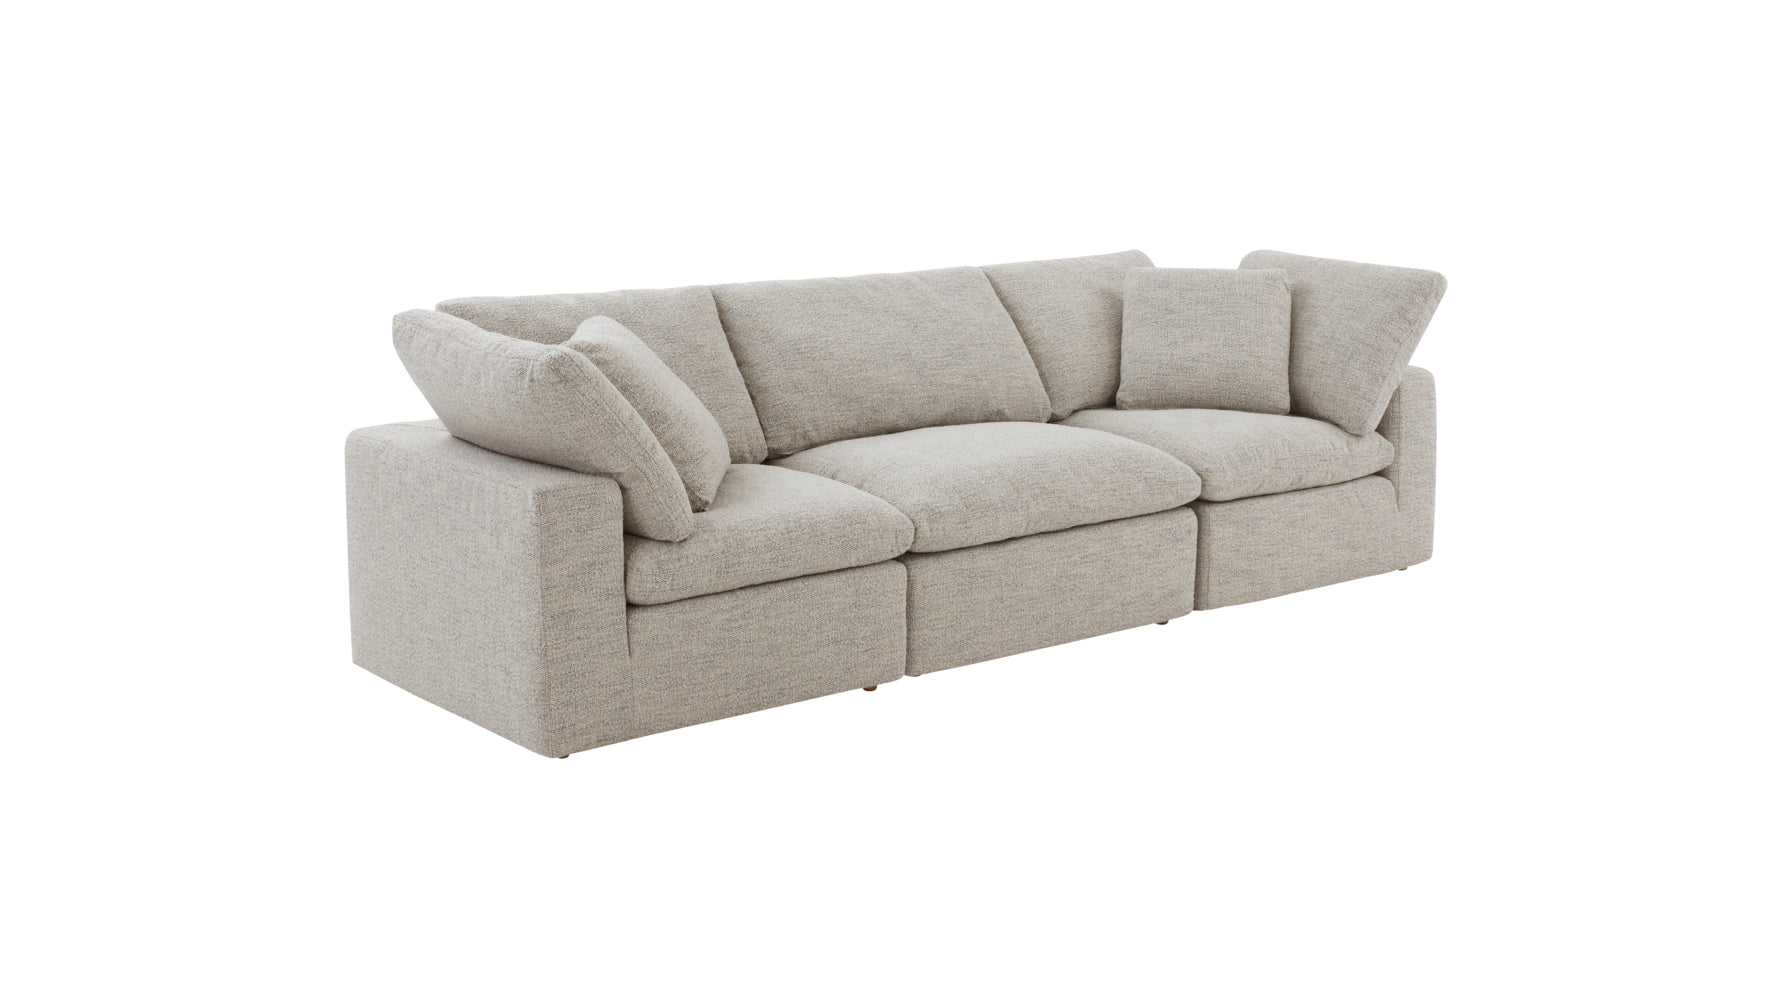 Movie Night™ 3-Piece Modular Sofa, Standard, Oatmeal - Image 2